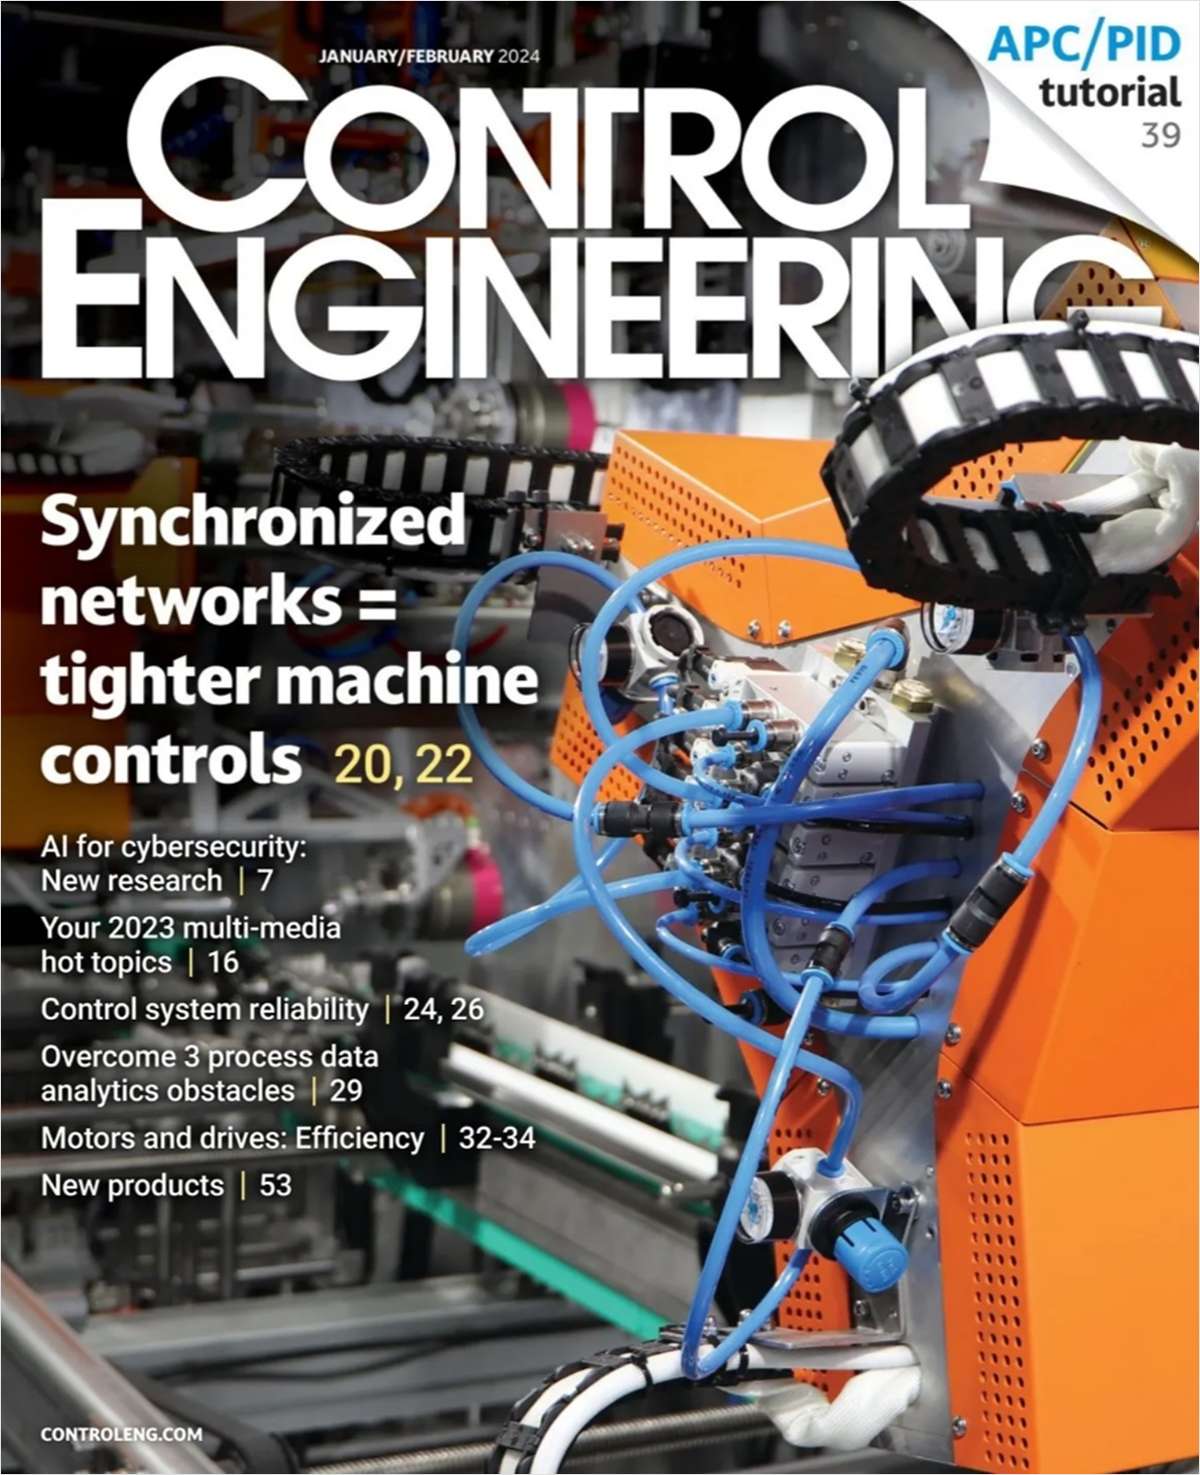 Control Engineering Magazine Subscription